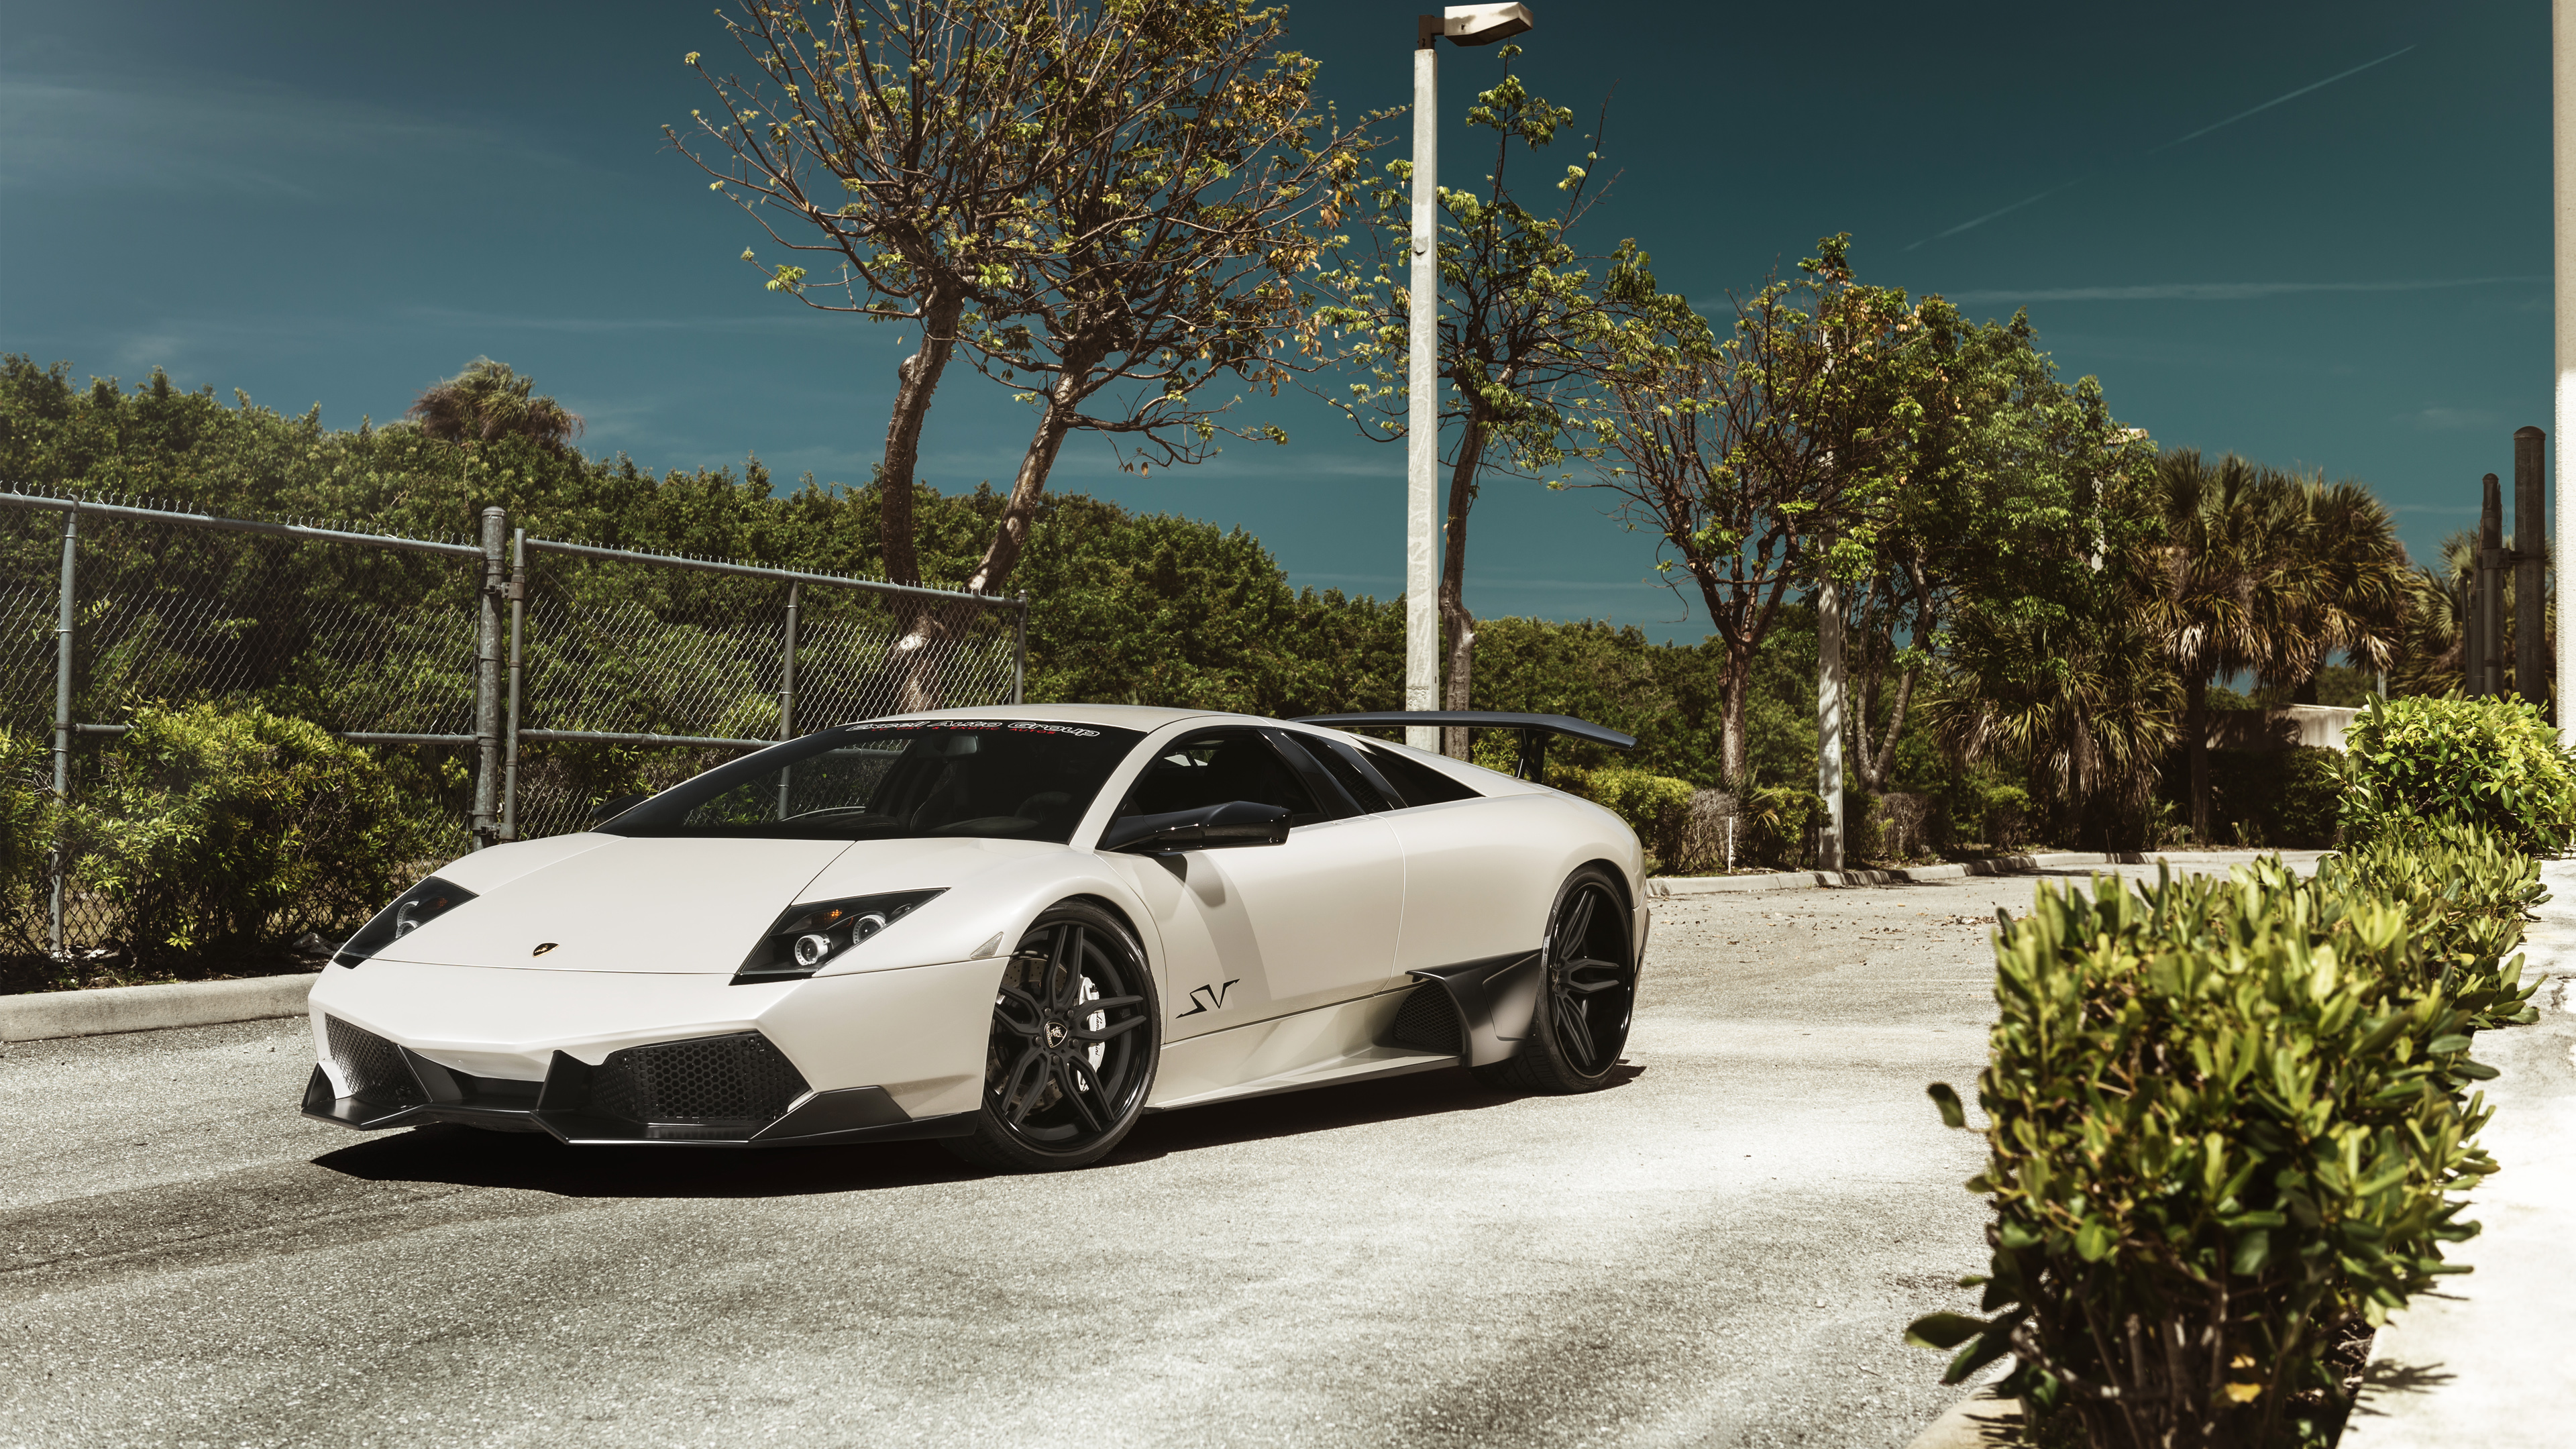 ADV1 Lamborghini Murcielago Wallpaper | HD Car Wallpapers | ID #5515